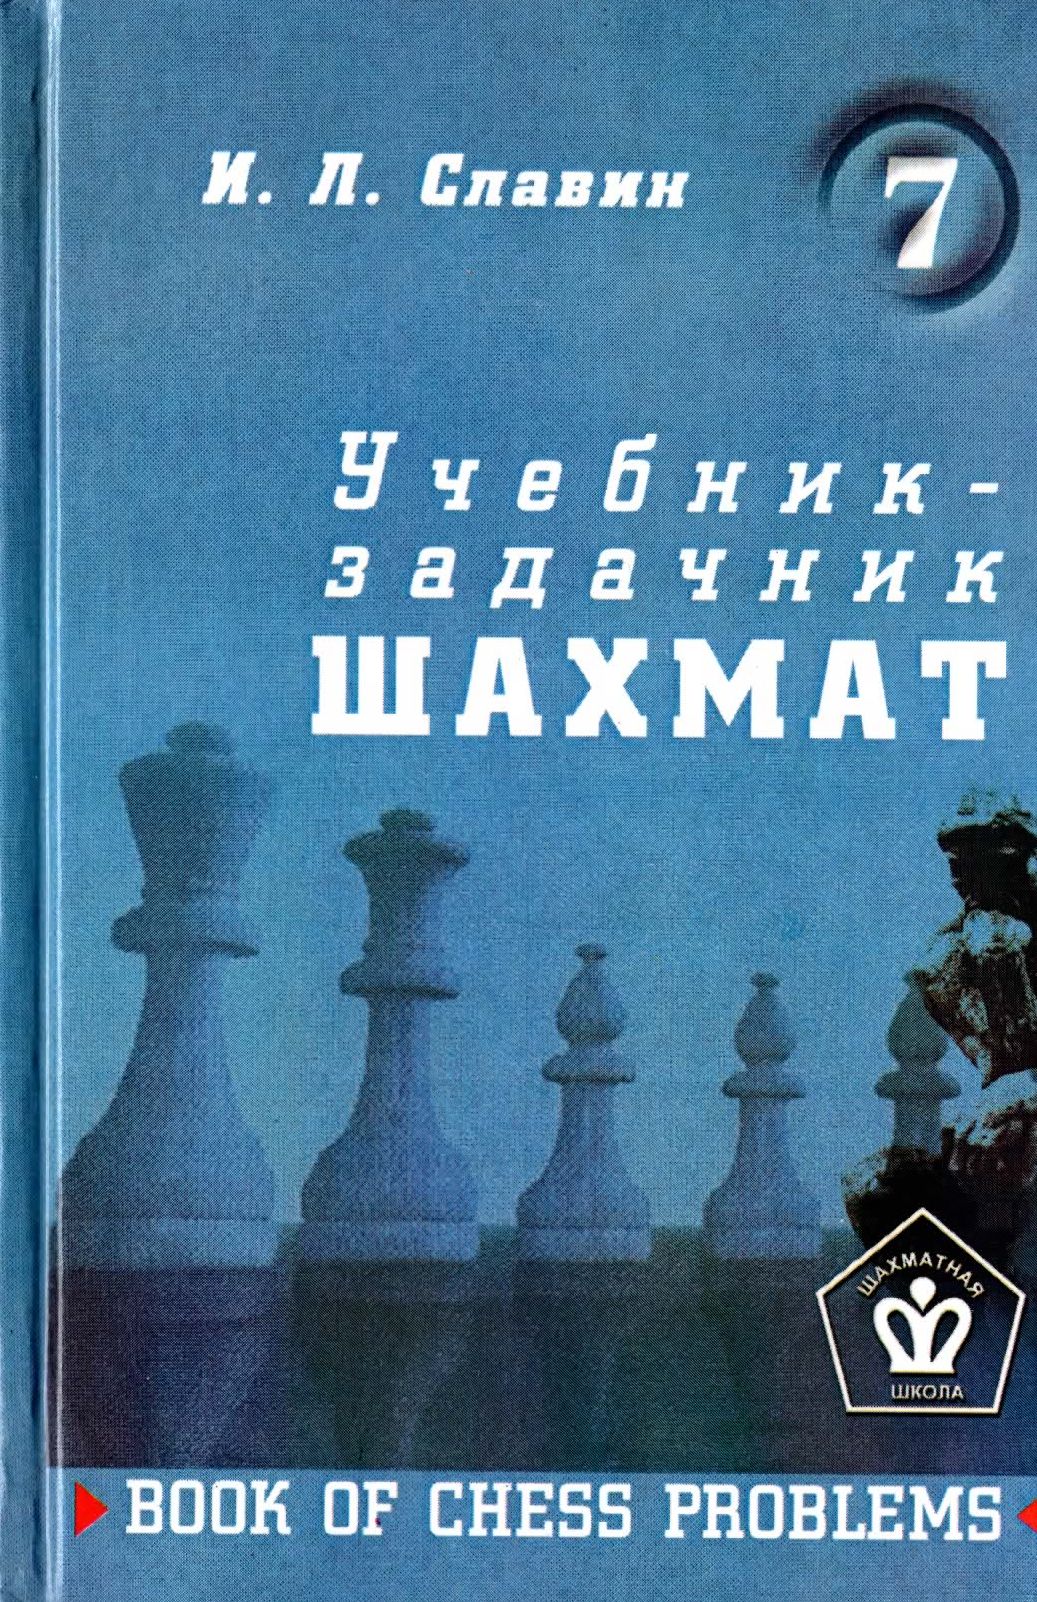 Славин И.Л. - Учебник-задачник шахмат